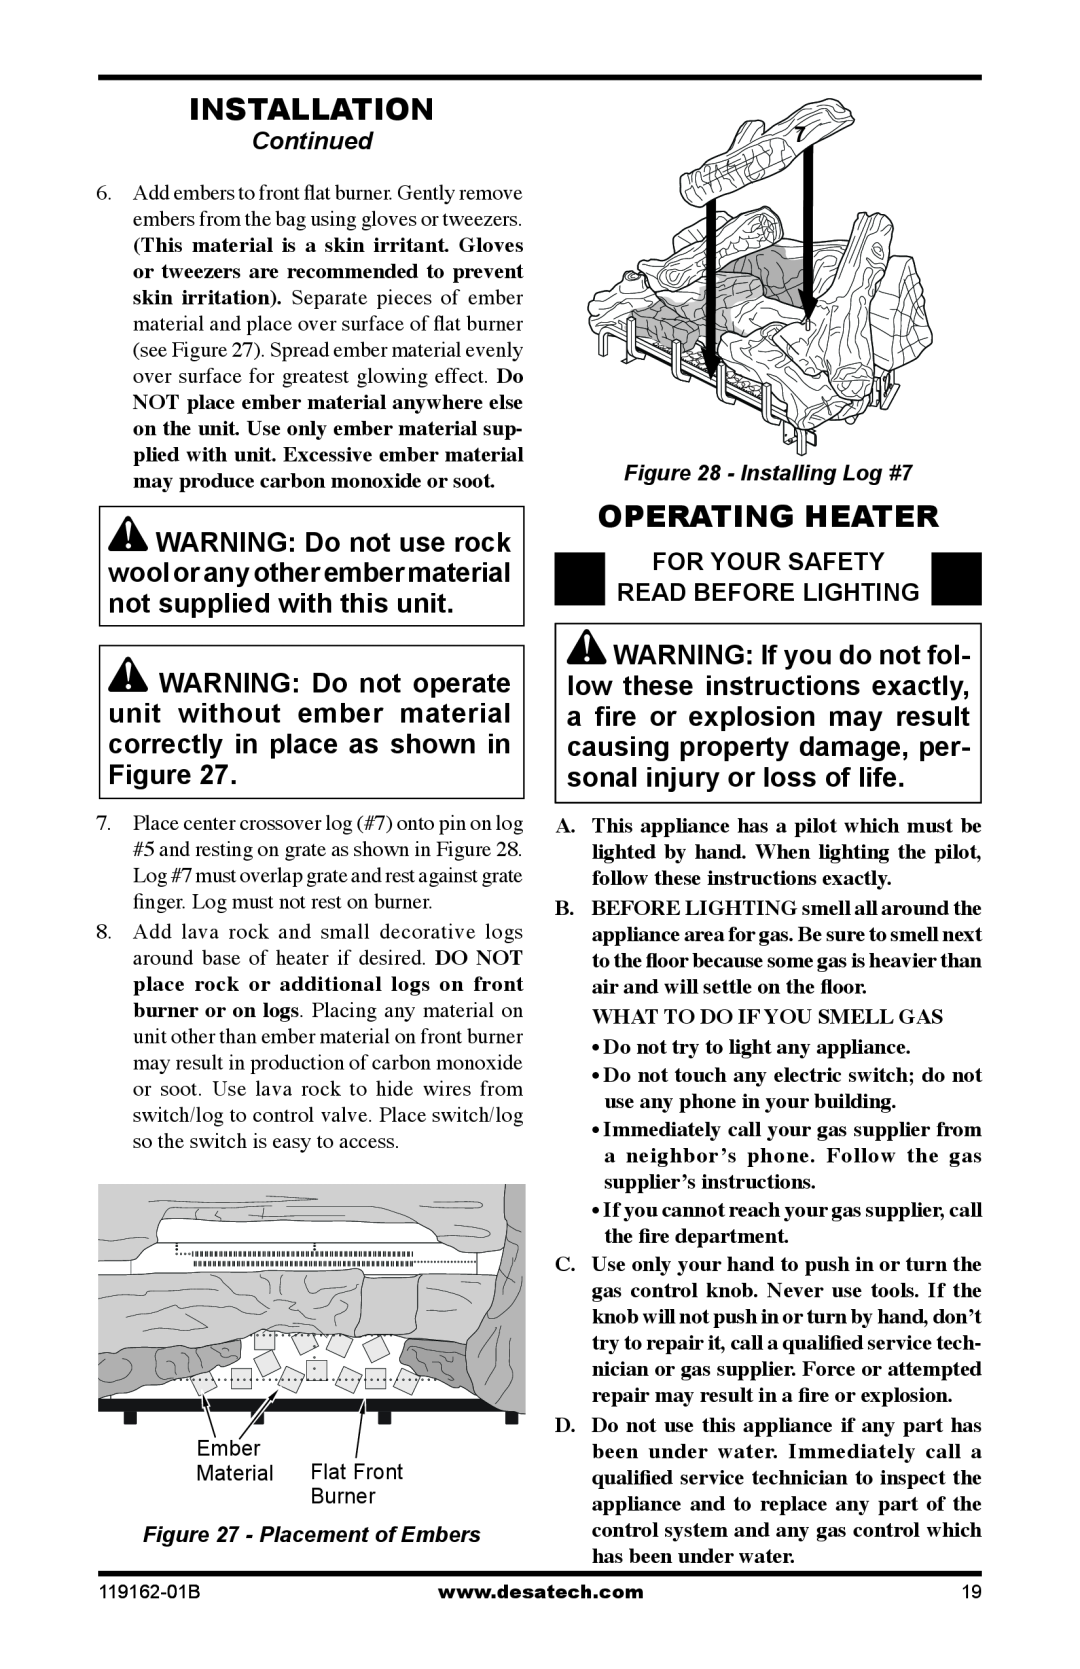 Desa VGC30NR/PR, VGC24NR/PR installation manual Installation, Operating Heater, For Your Safety Read Before Lighting 